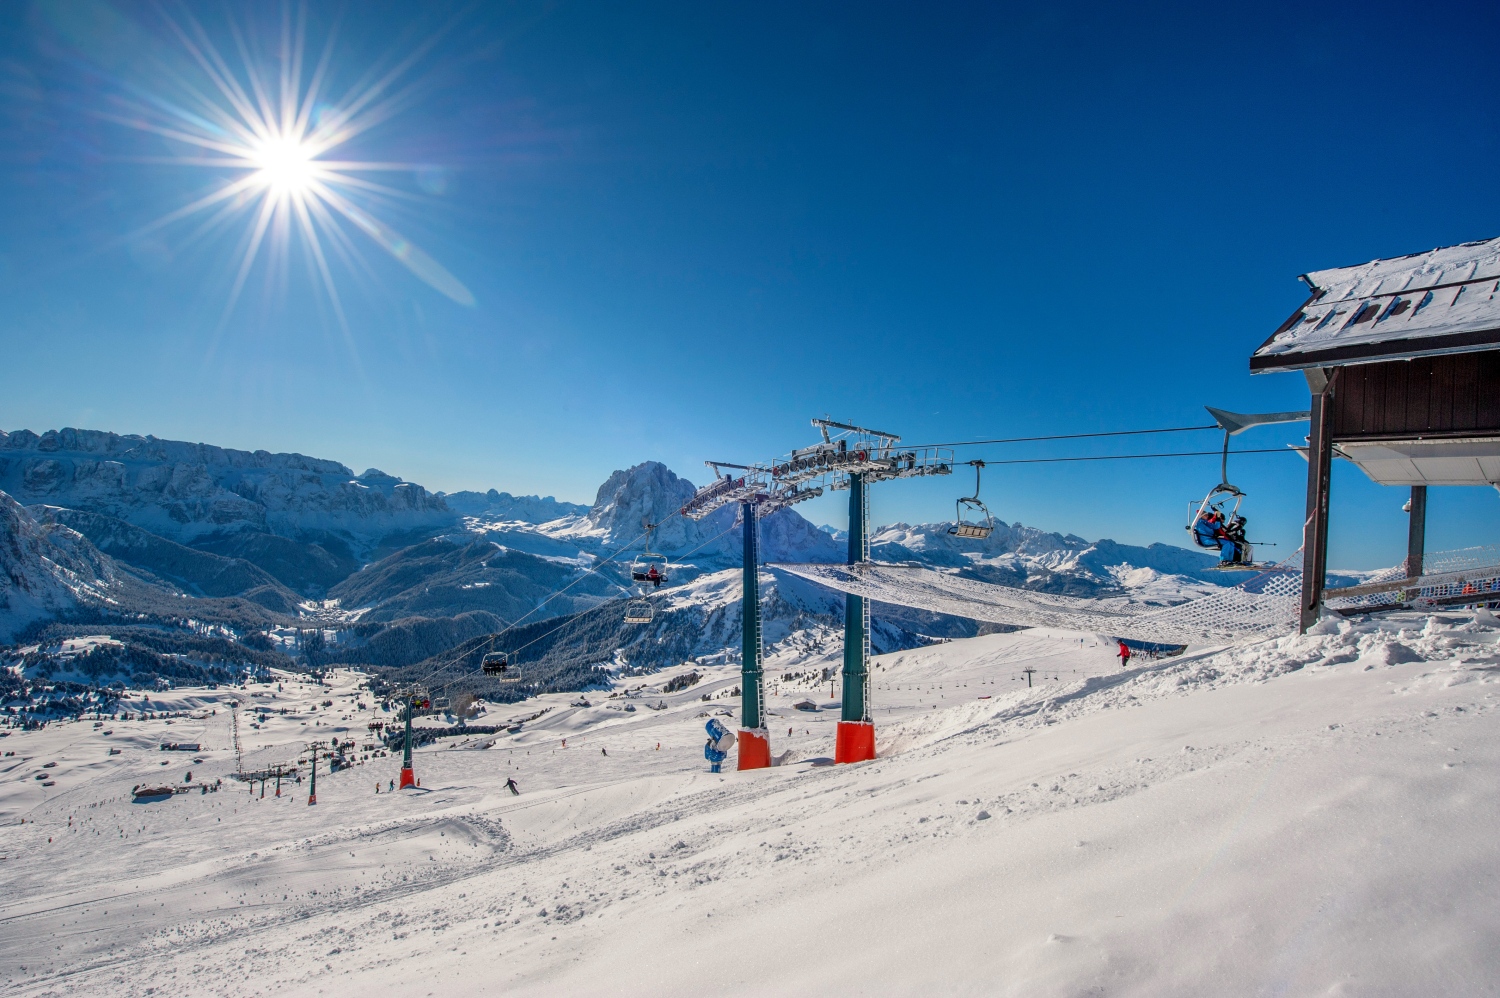 Italy's Secret Ski Resort Is One Of The World's Best